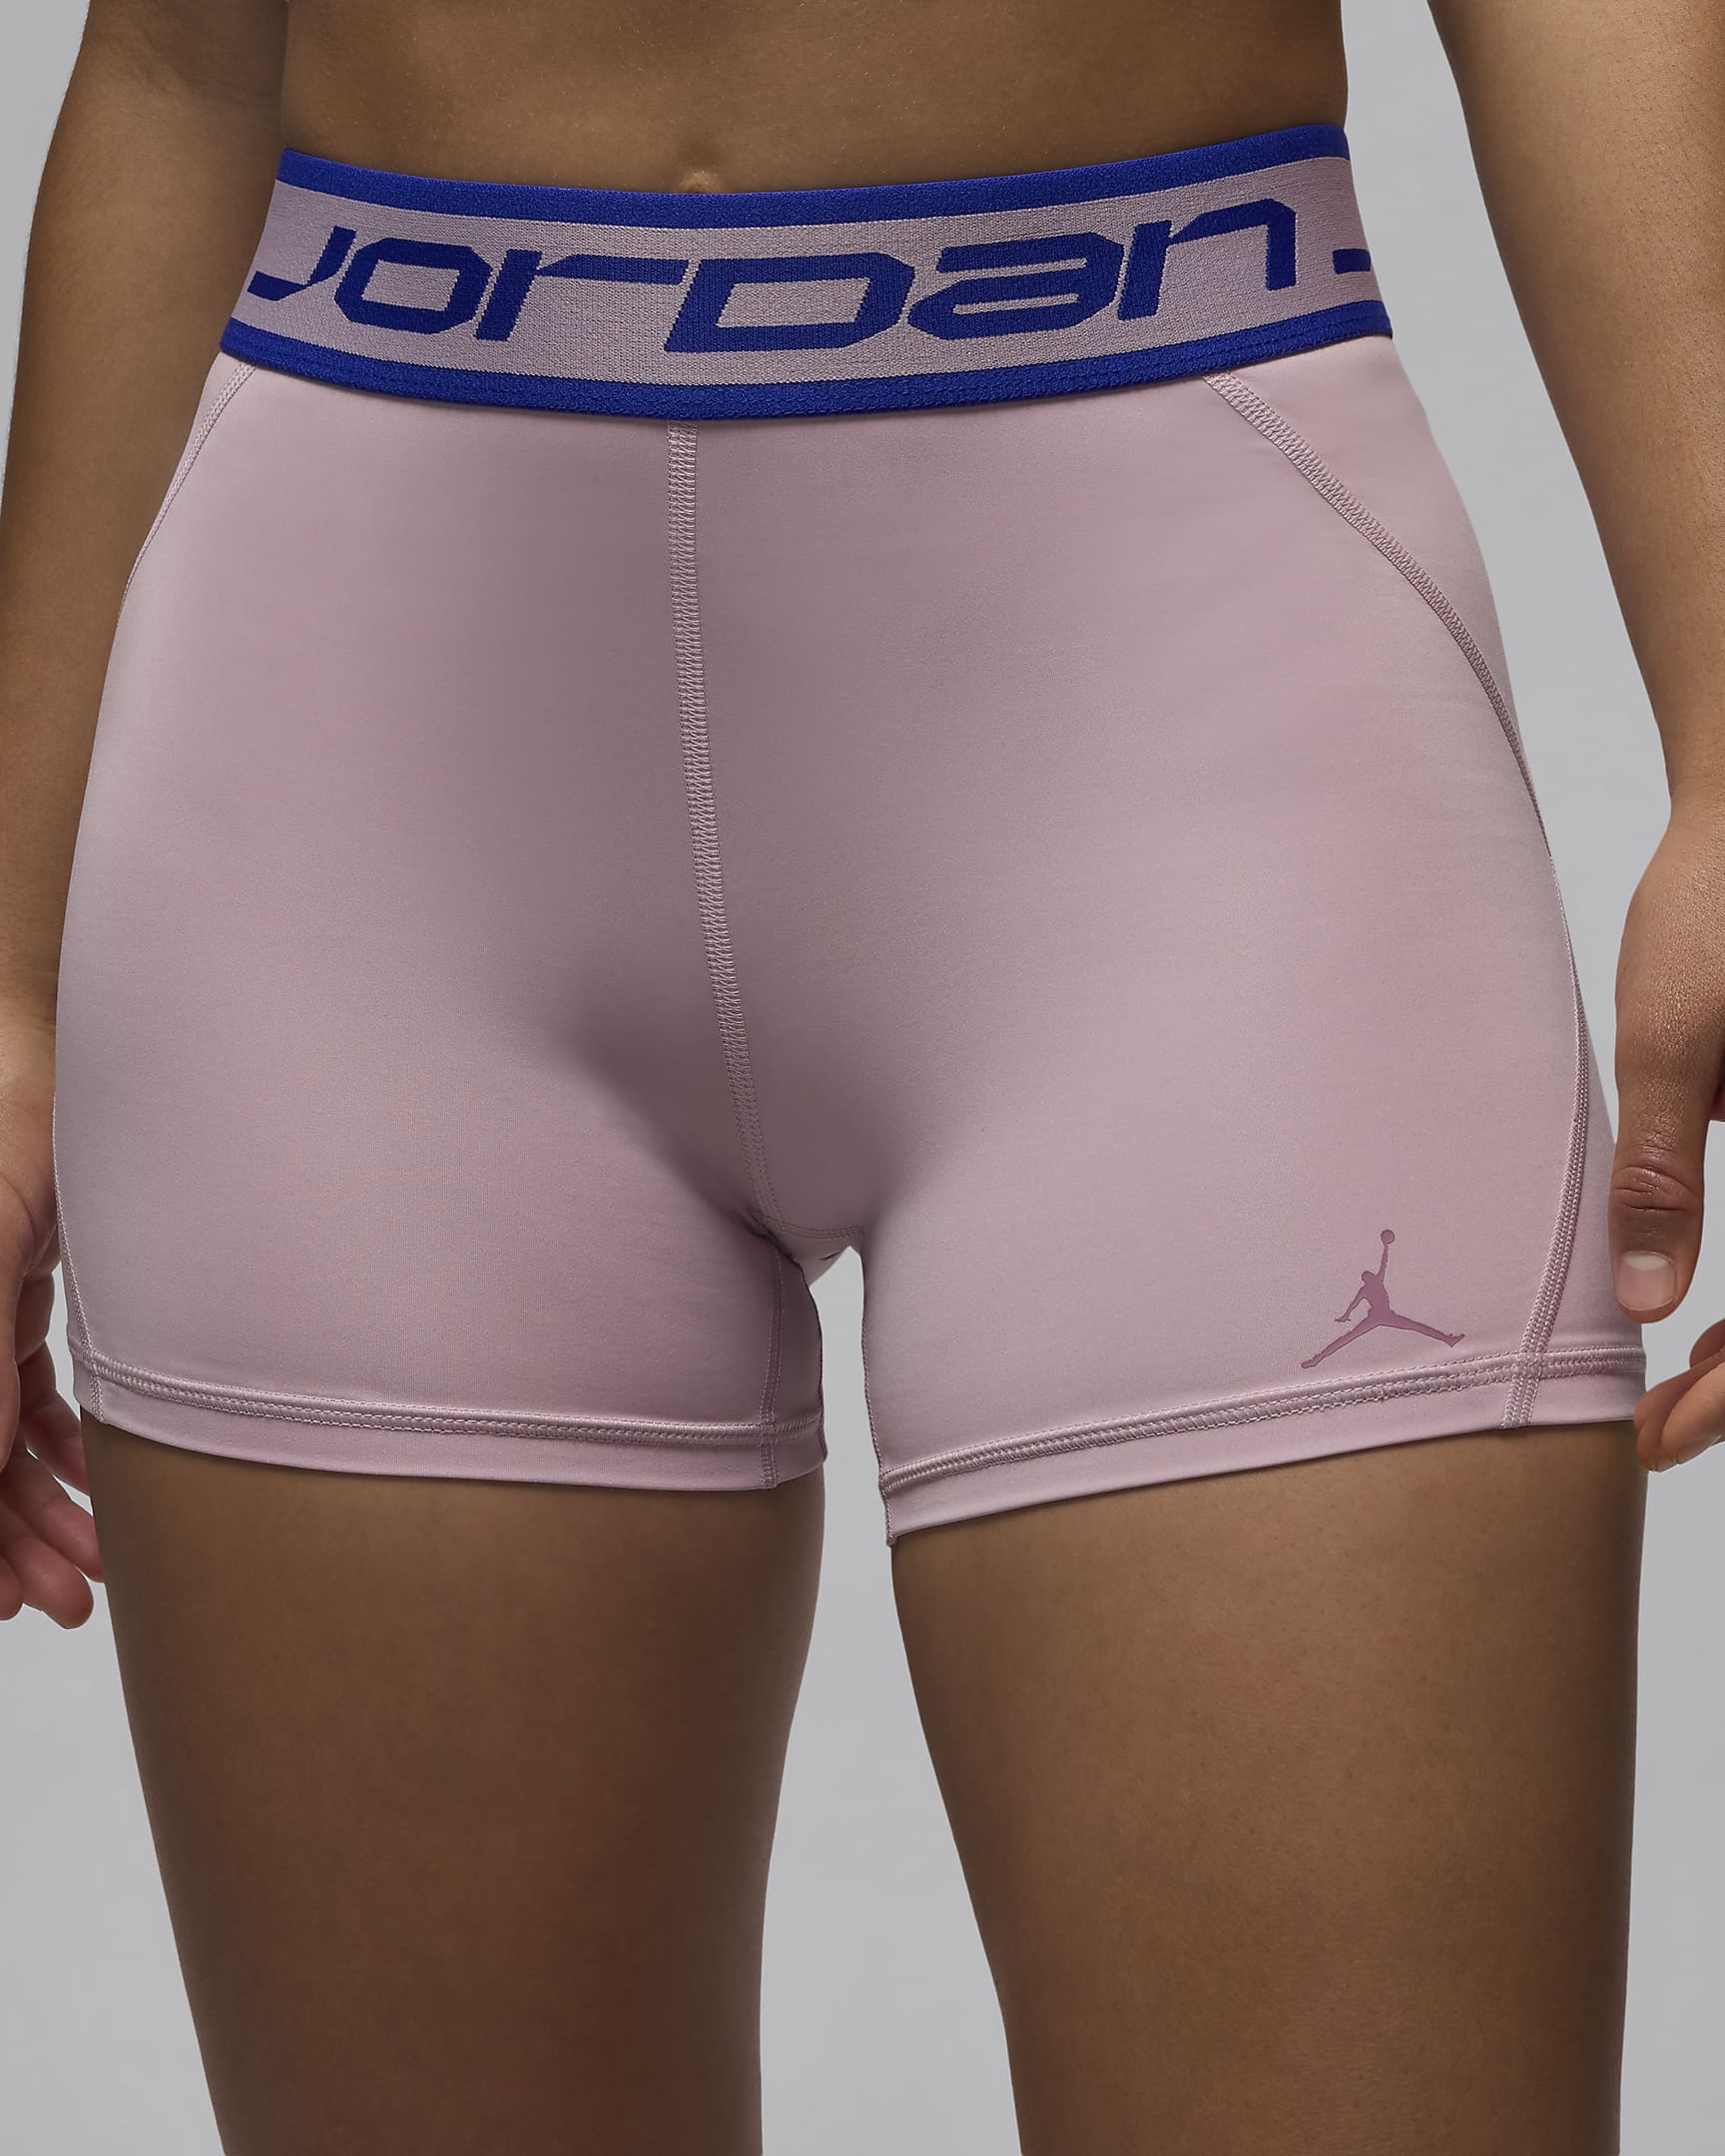 Jordan Sport Women's 5" Shorts - Plum Chalk/Plum Dust